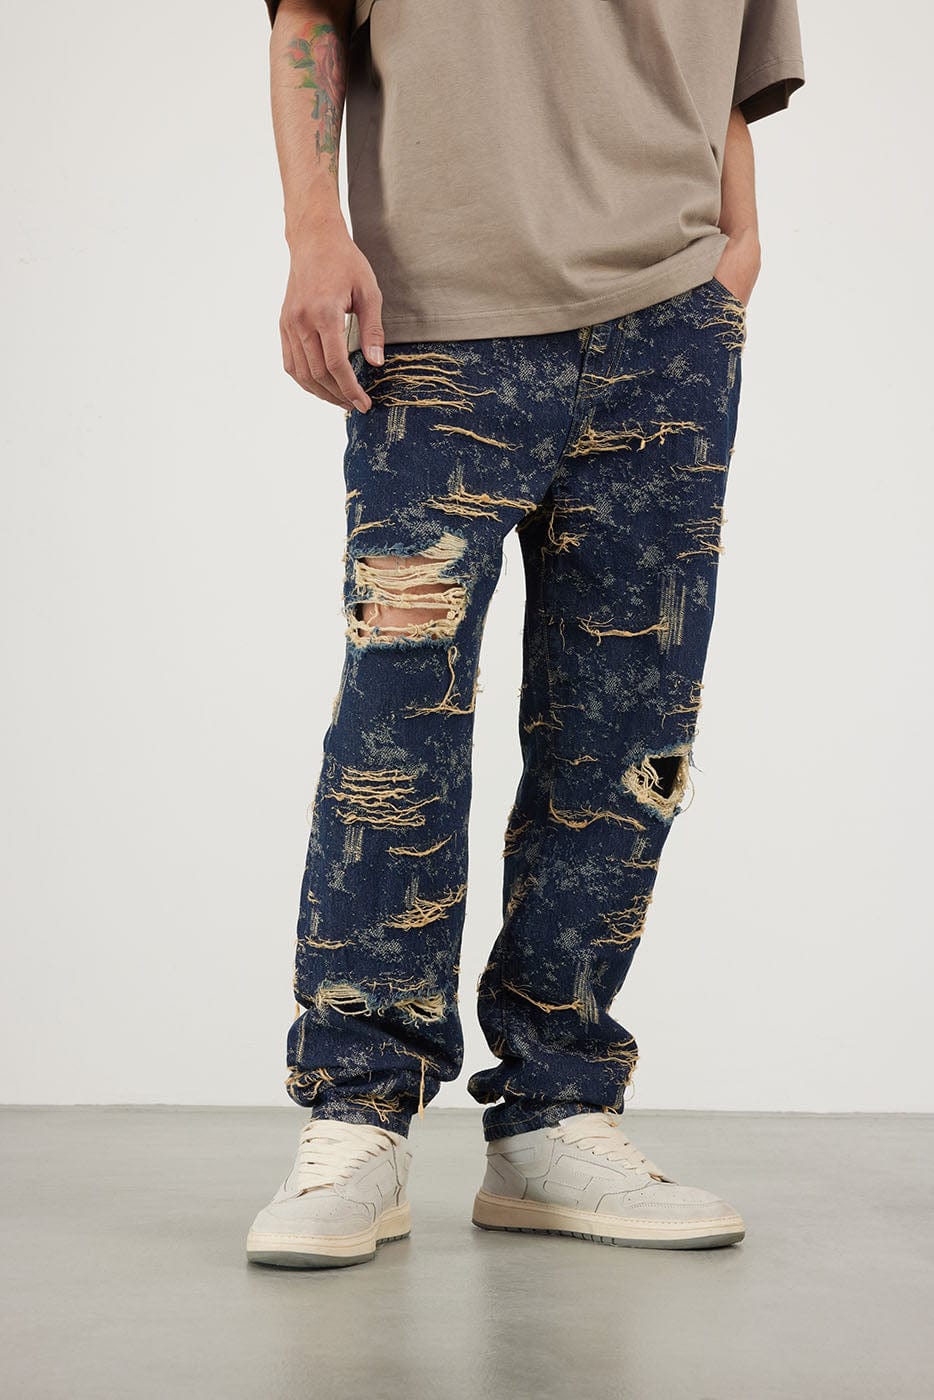 BONELESS Heavily Ripped Jeans, premium urban and streetwear designers apparel on PROJECTISR.com, BONELESS